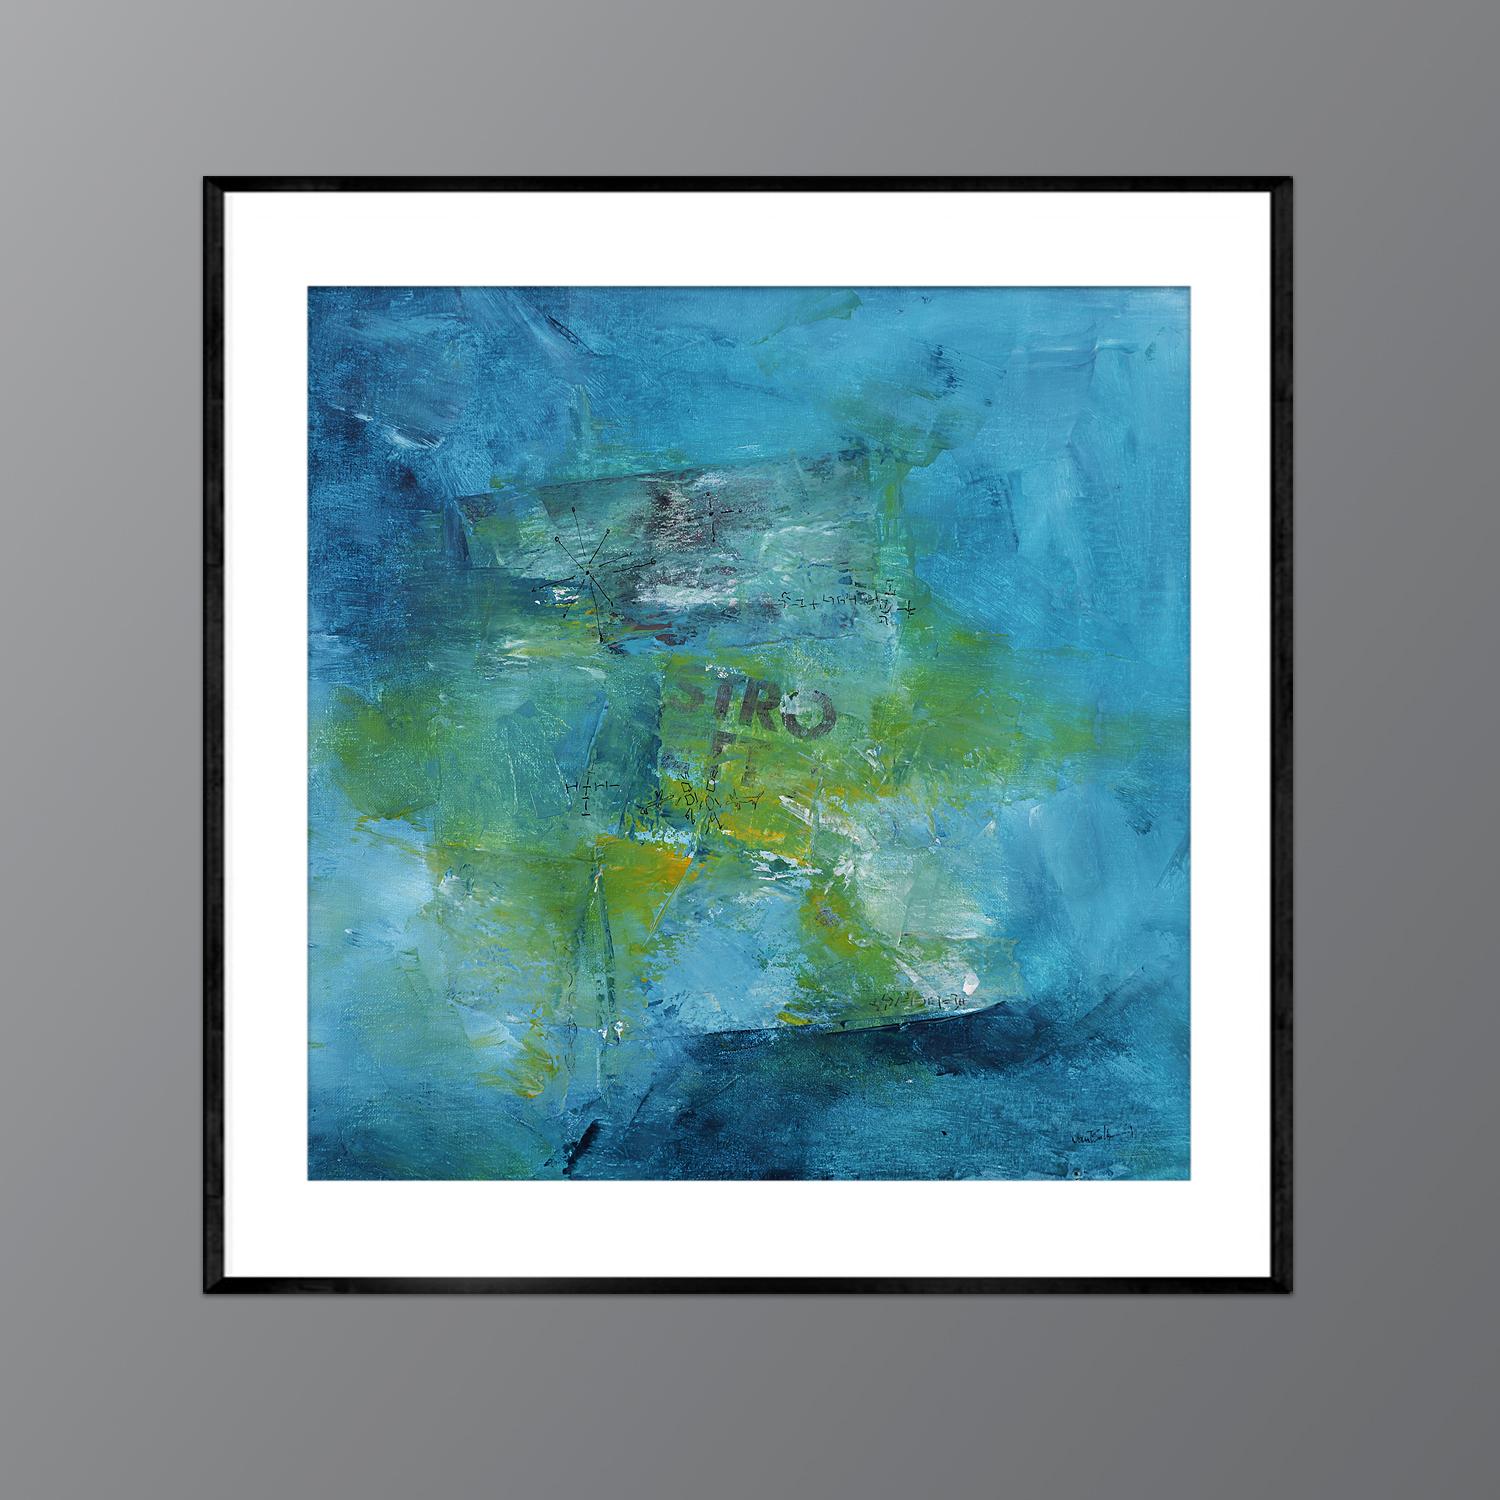 STRO, light blue, green yellow abstract painting. - Abstract Mixed Media Art by Robert van Bolderick